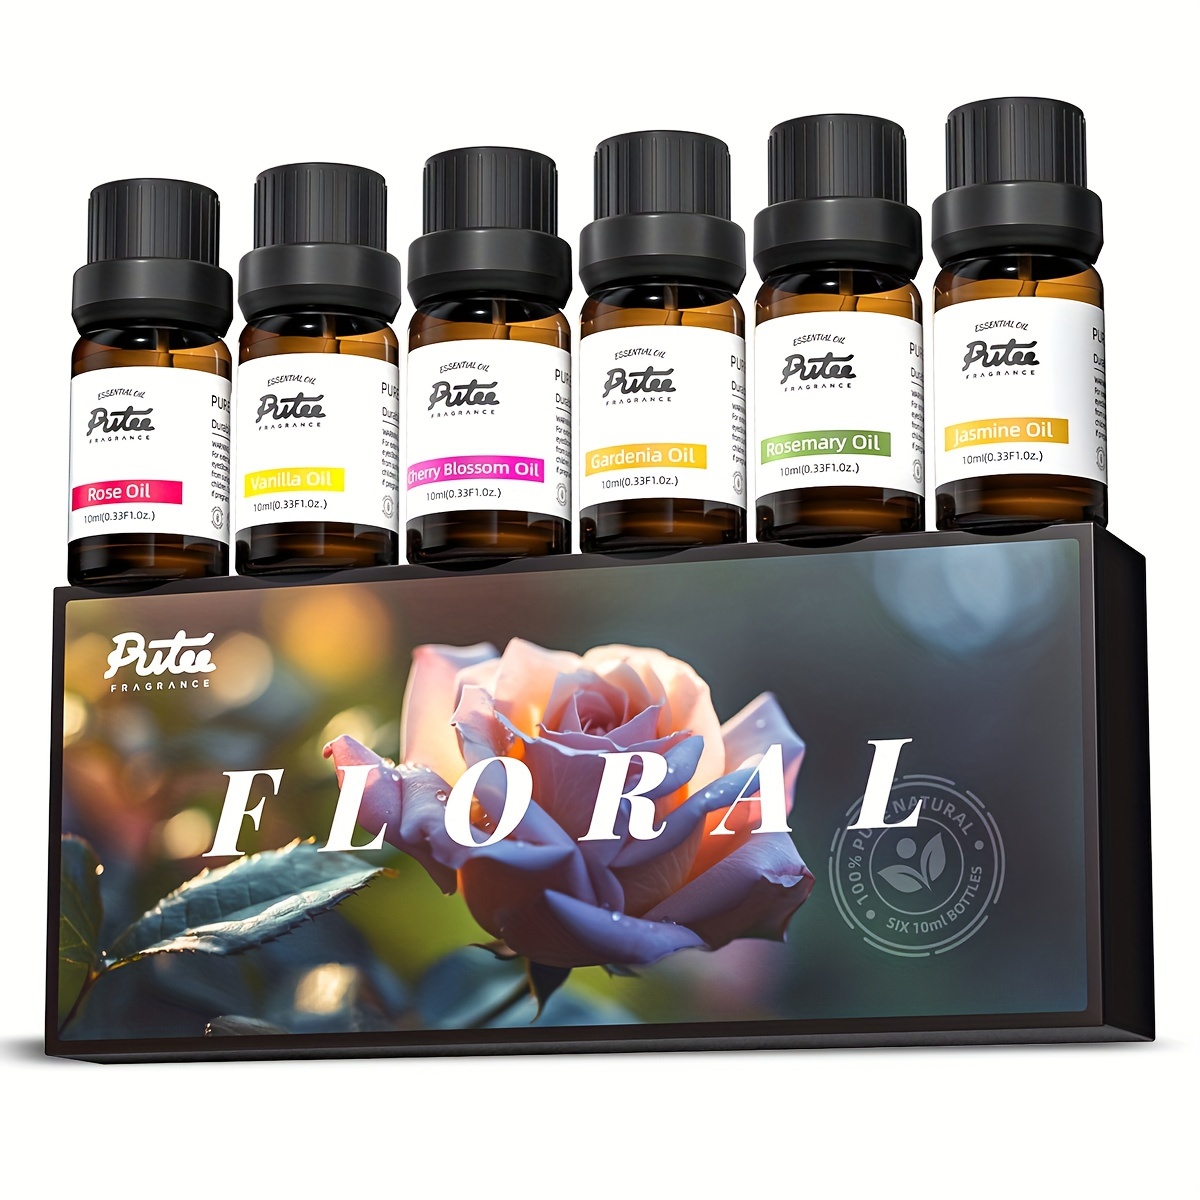 EUQEE Premium Grade Floral Essential Oils Set 6PCS Fragrance Oils Gift Set  for Diffuser, Aromatherapy, Cleaning - Honeysuckle, Lilac, Parma Violet,  Japanese Magnolia, Orange Blossom (10ml) 